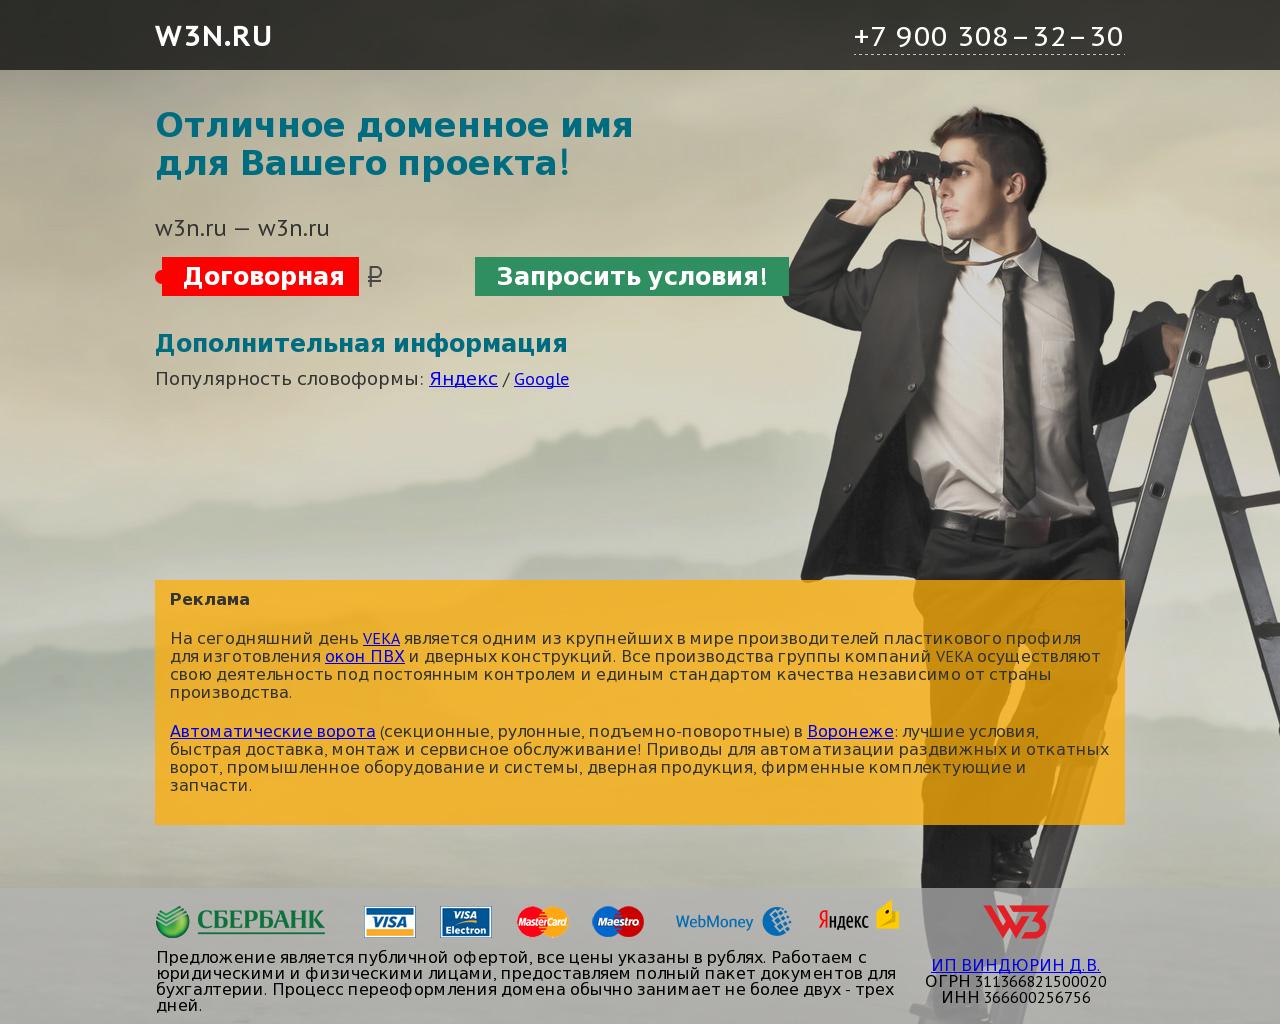 Изображение сайта w3n.ru в разрешении 1280x1024